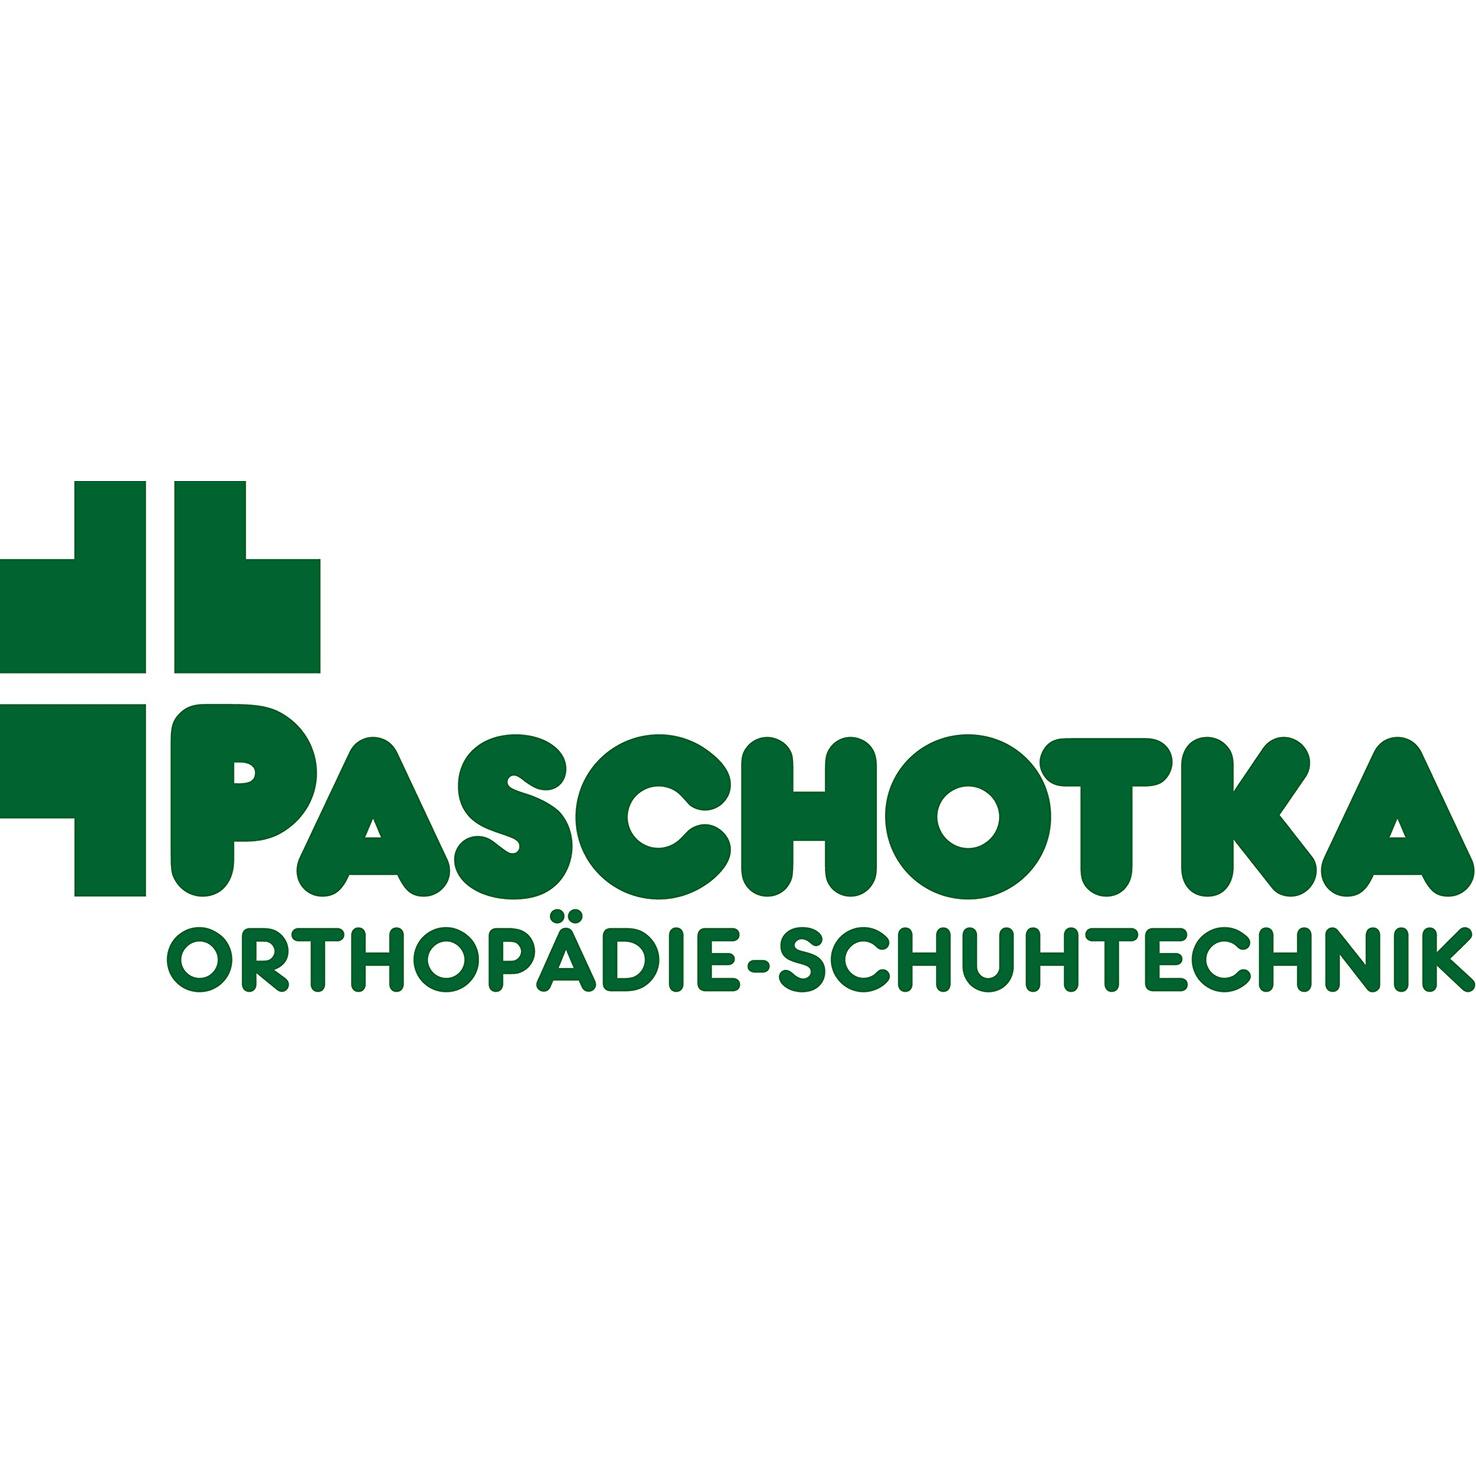 Paschotka Orthopädie - Schuhtechnik Logo